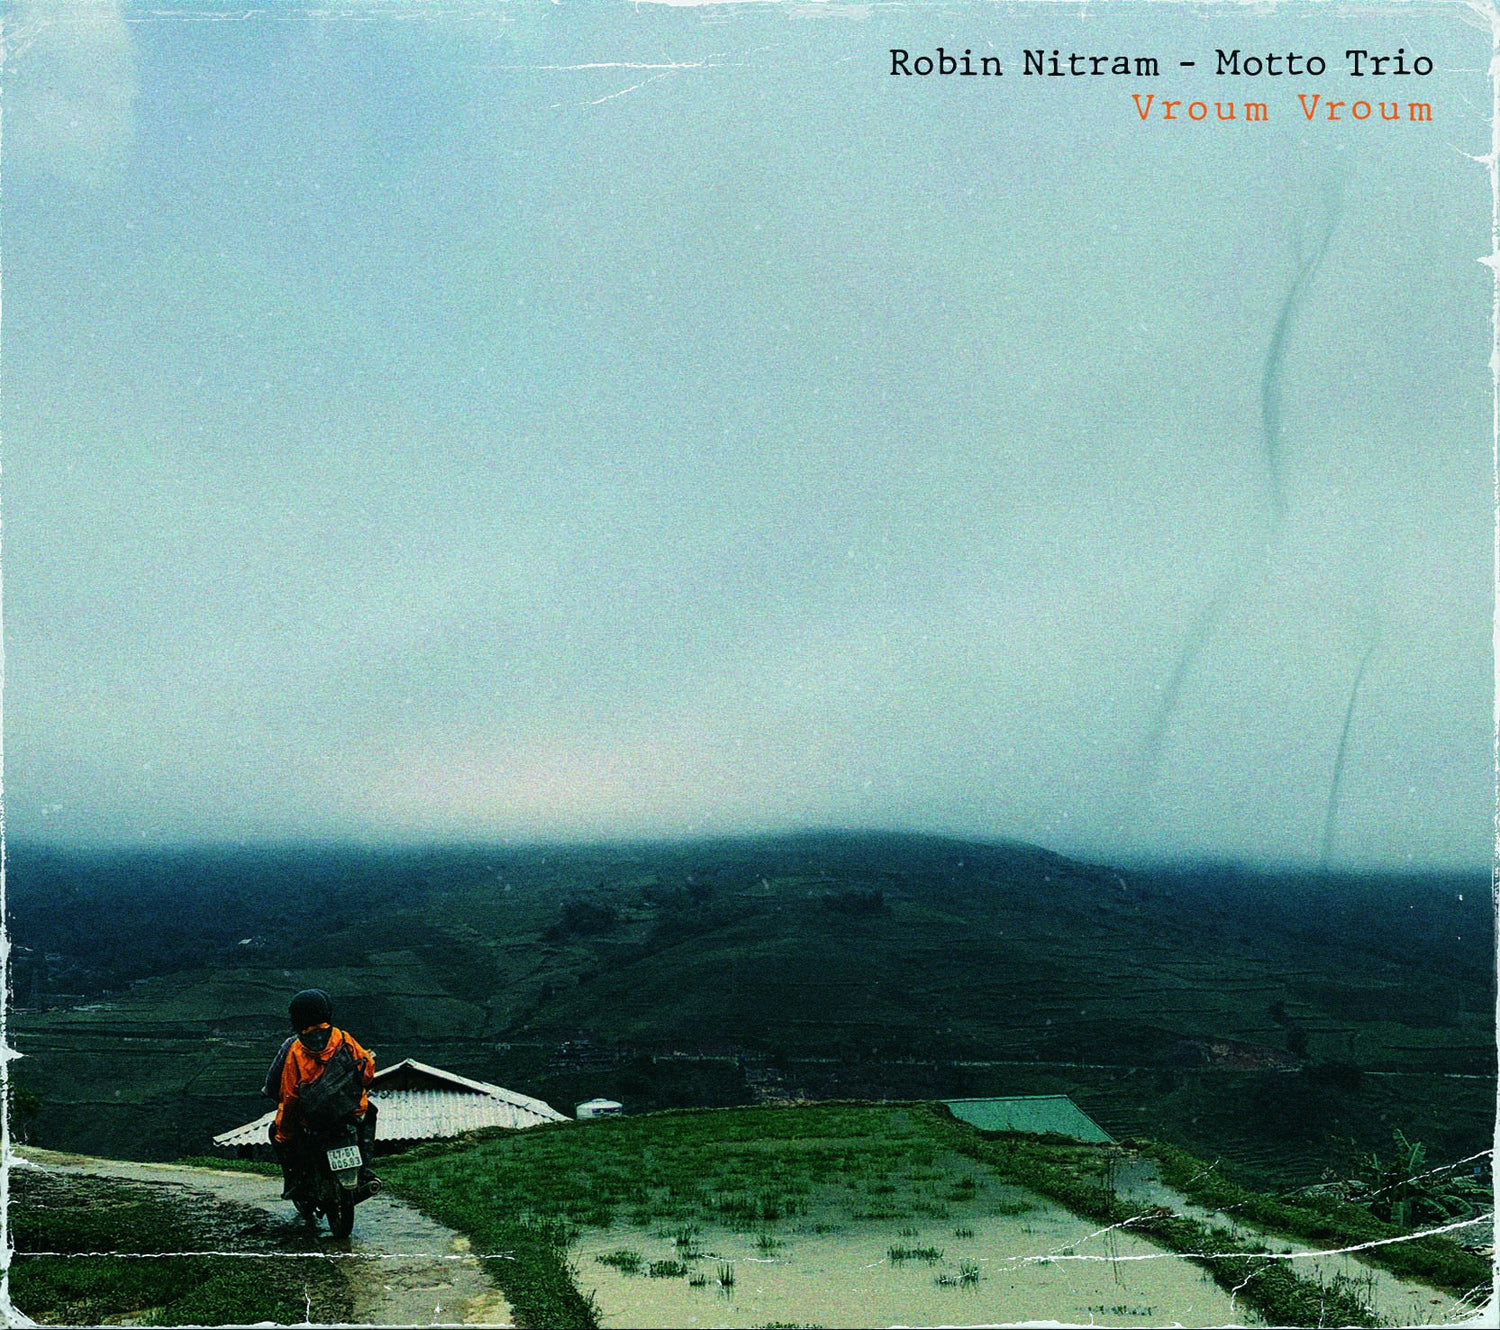 Pochette de : VROUM VROUM - ROBIN NITRAM   MOTTO TRIO (CD)